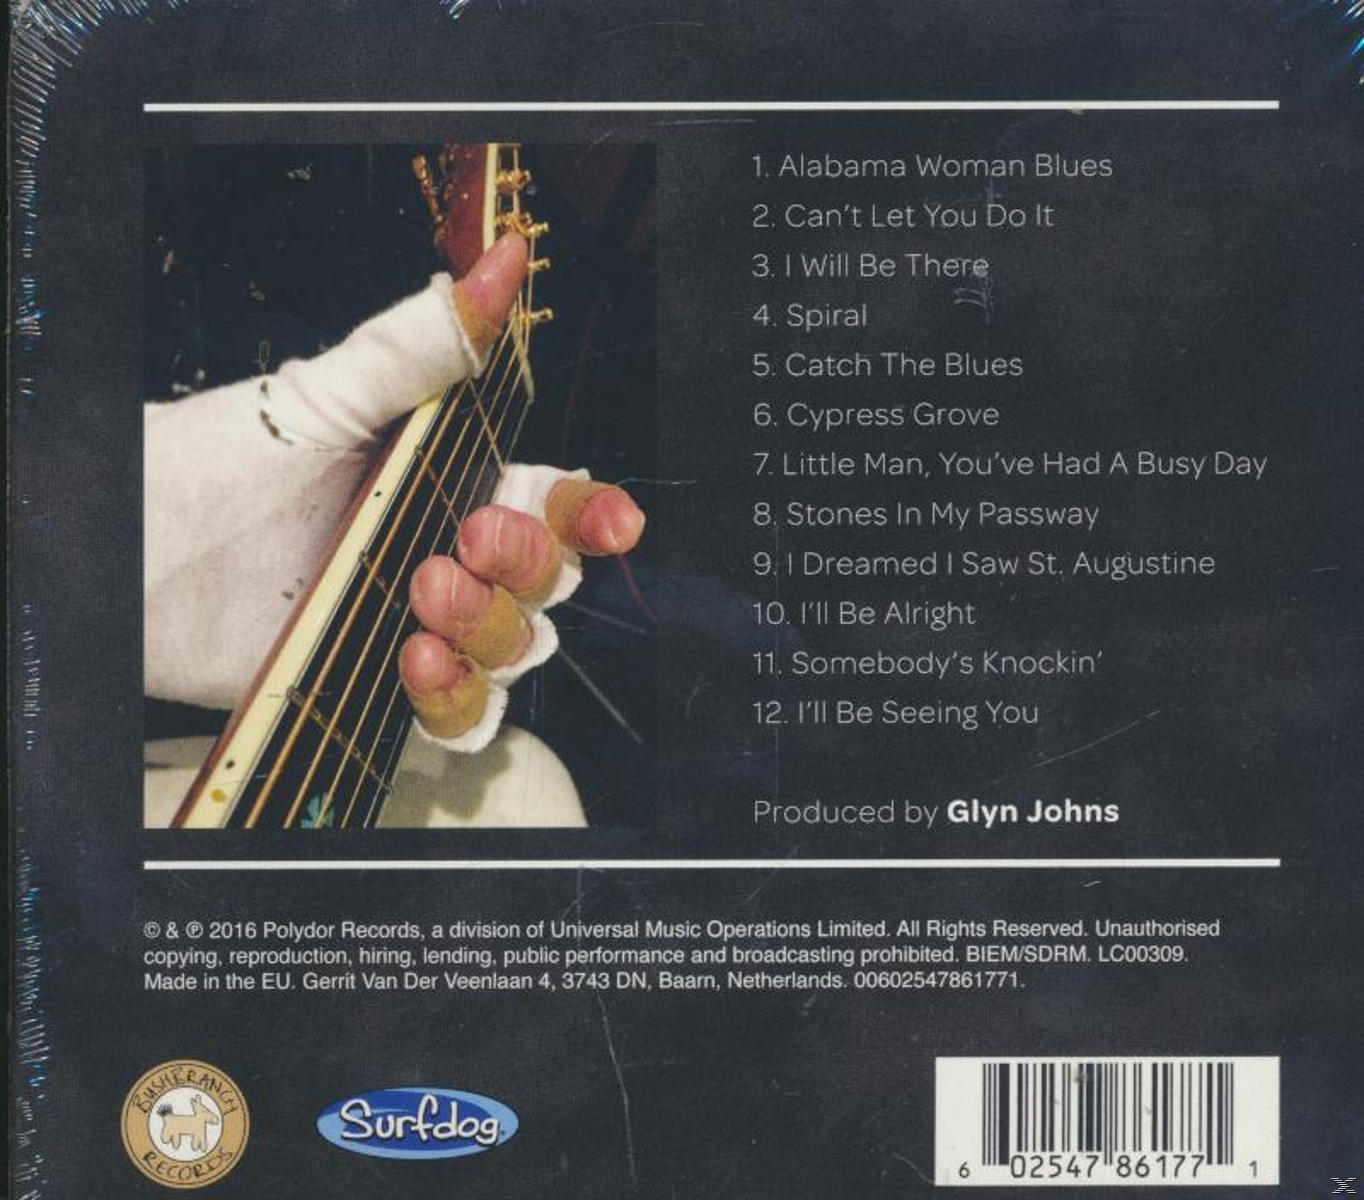 Eric Clapton - Do - I Still (CD)